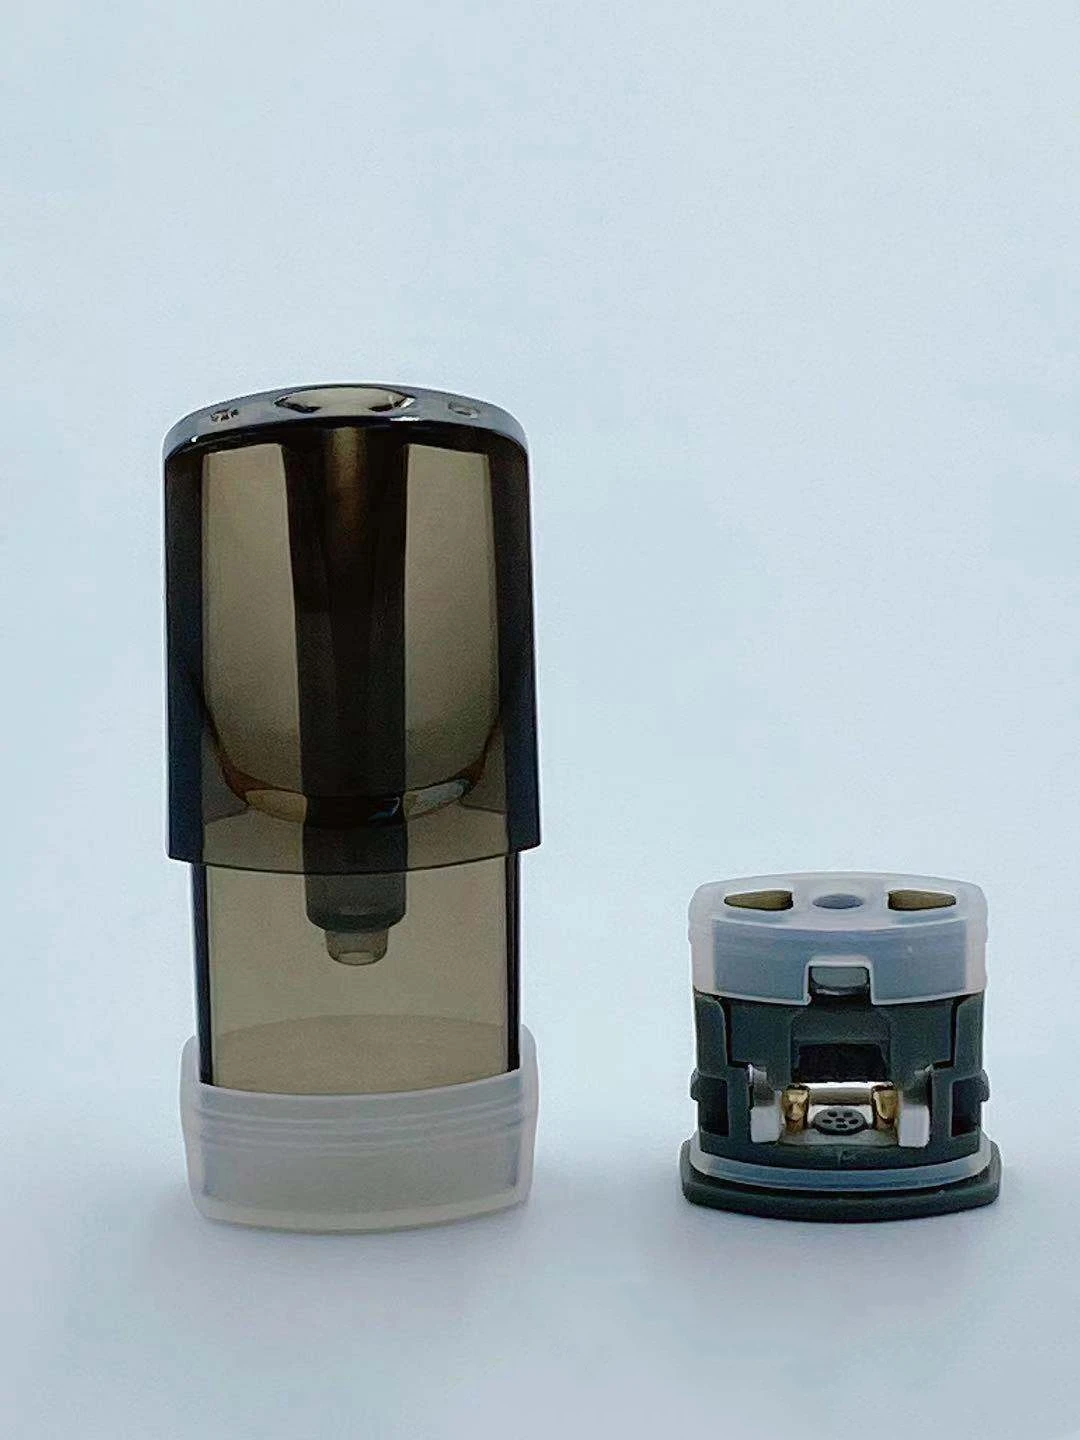 

1pcs/lot Ceramic Coil Refillable Cartridge for Yooz Empty Pod Replacement Vape Cartridge Atomizer 2ml 1.0ohm vape pen device